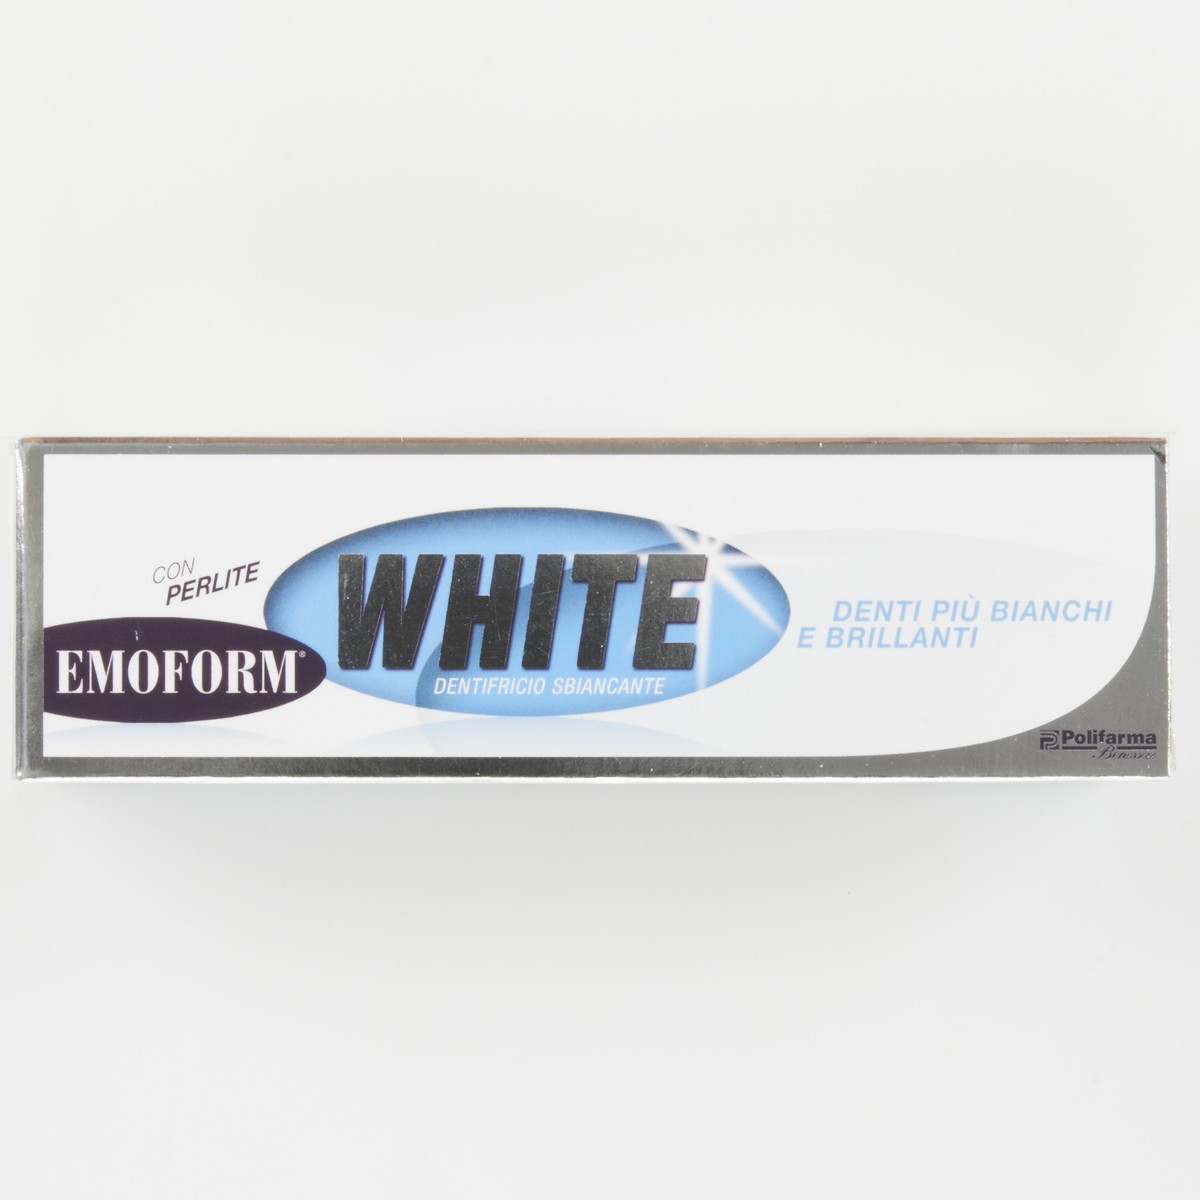 Emoform Dentifricio sbiancante White